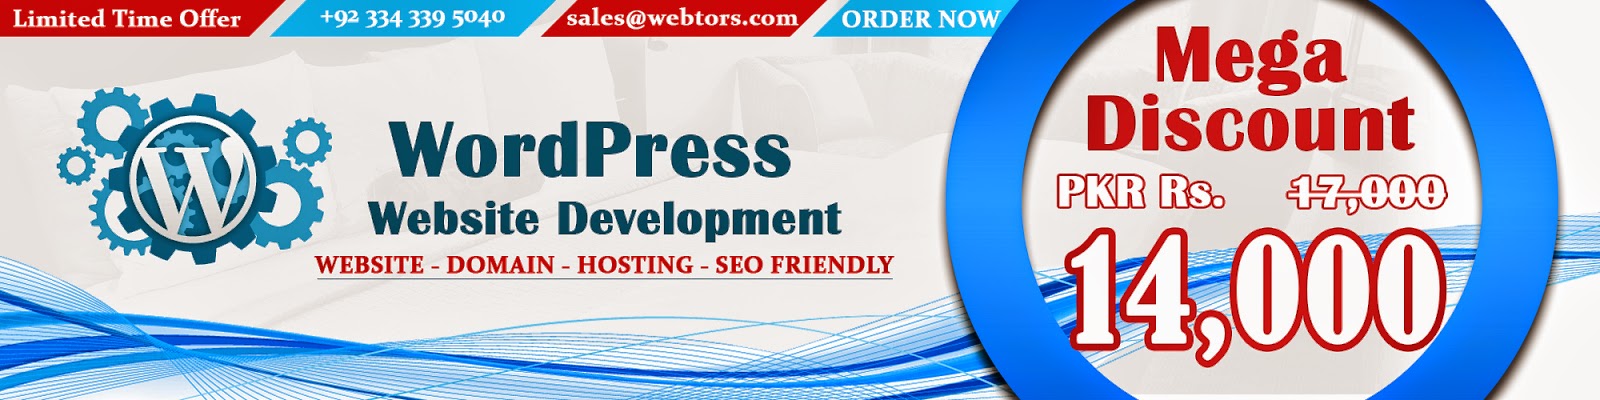 WordPress Website Service In Pakistan